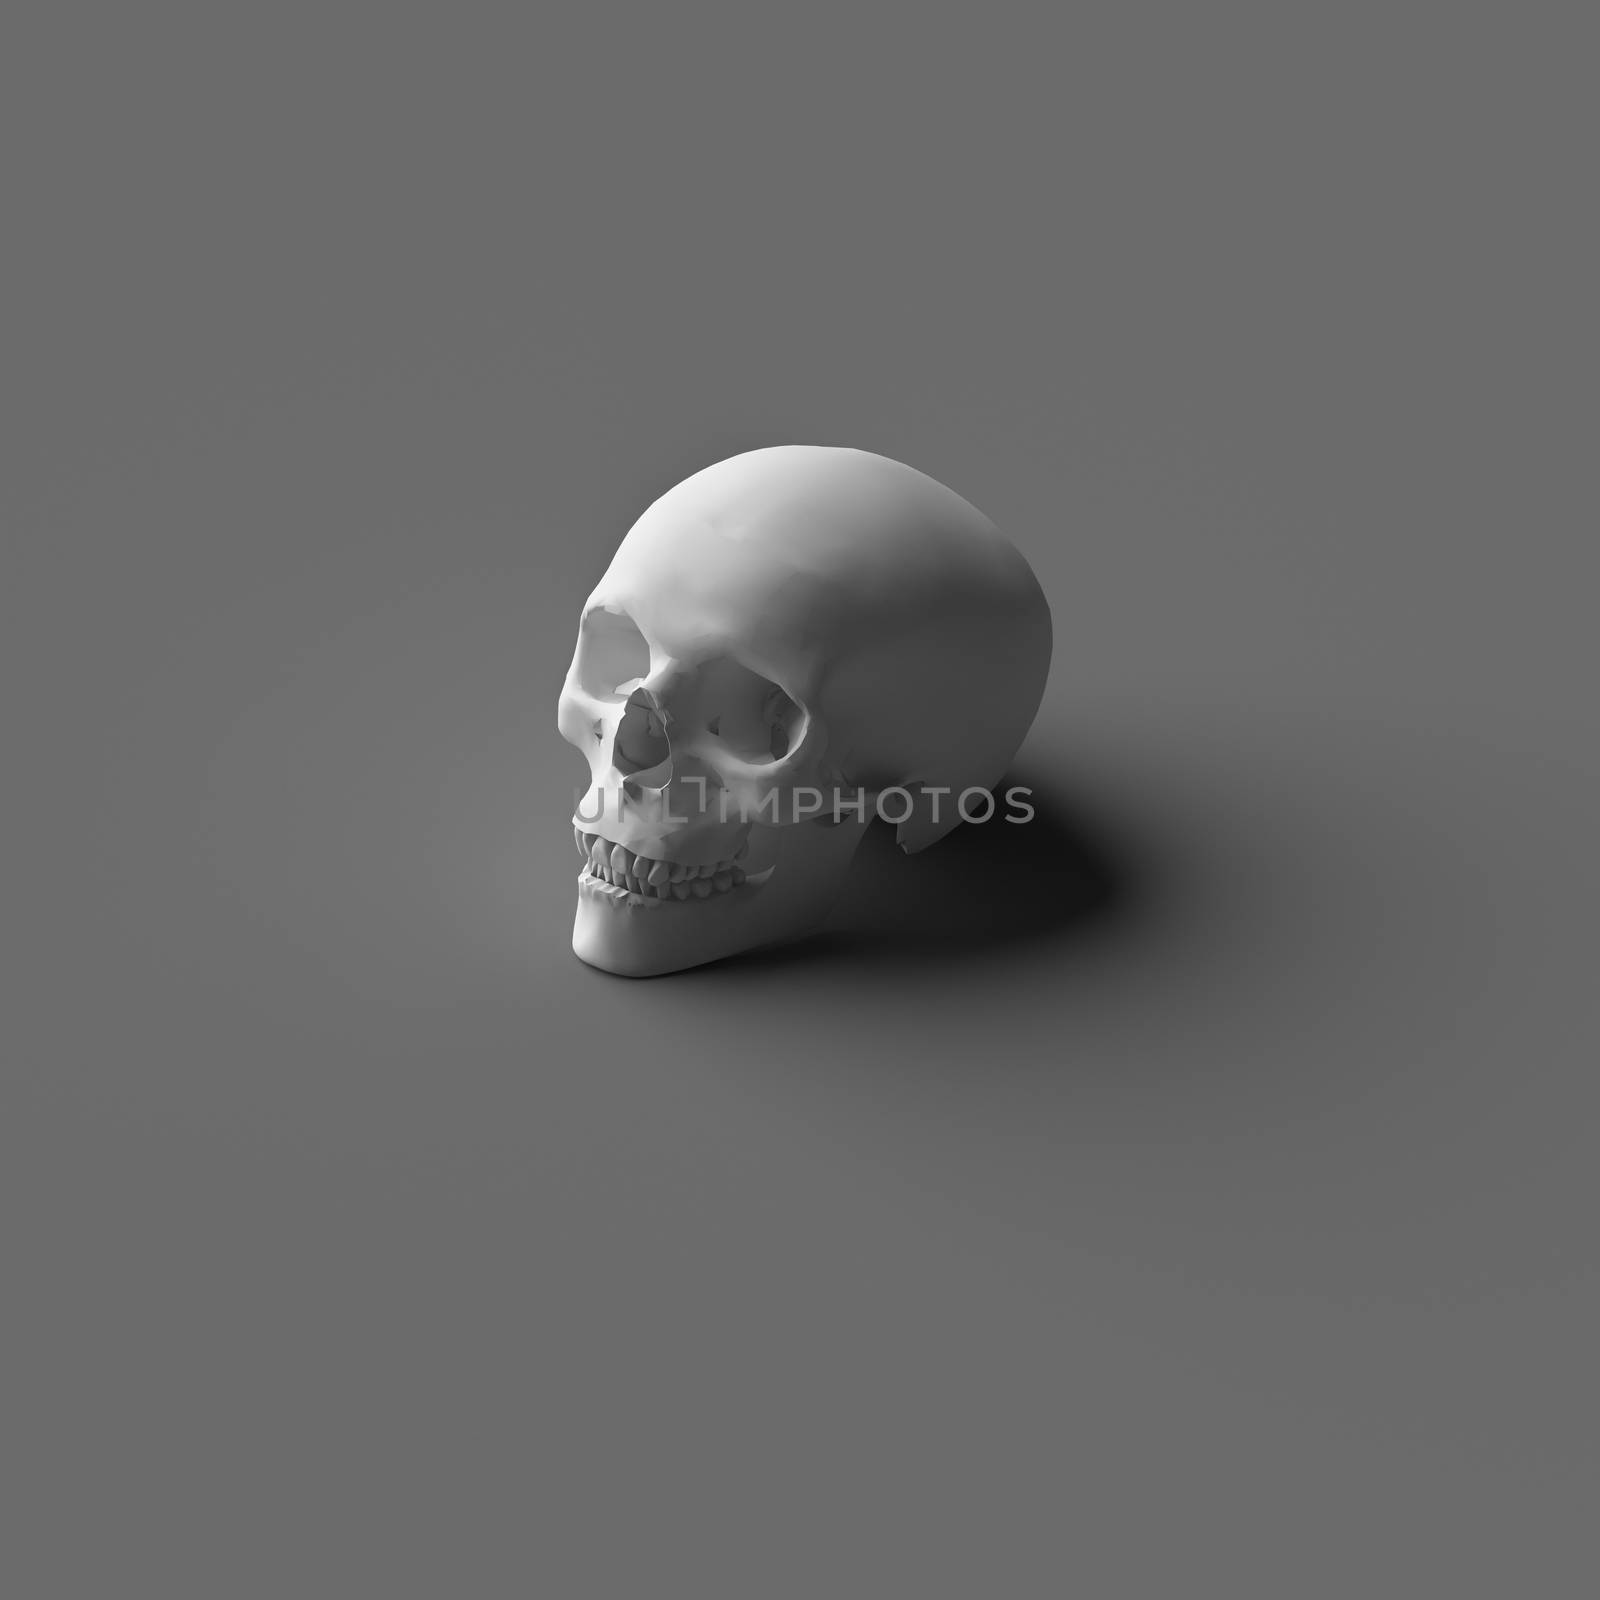 SINGLE 3D RENDERING HUMAN HEAD SKULL by PrettyTG